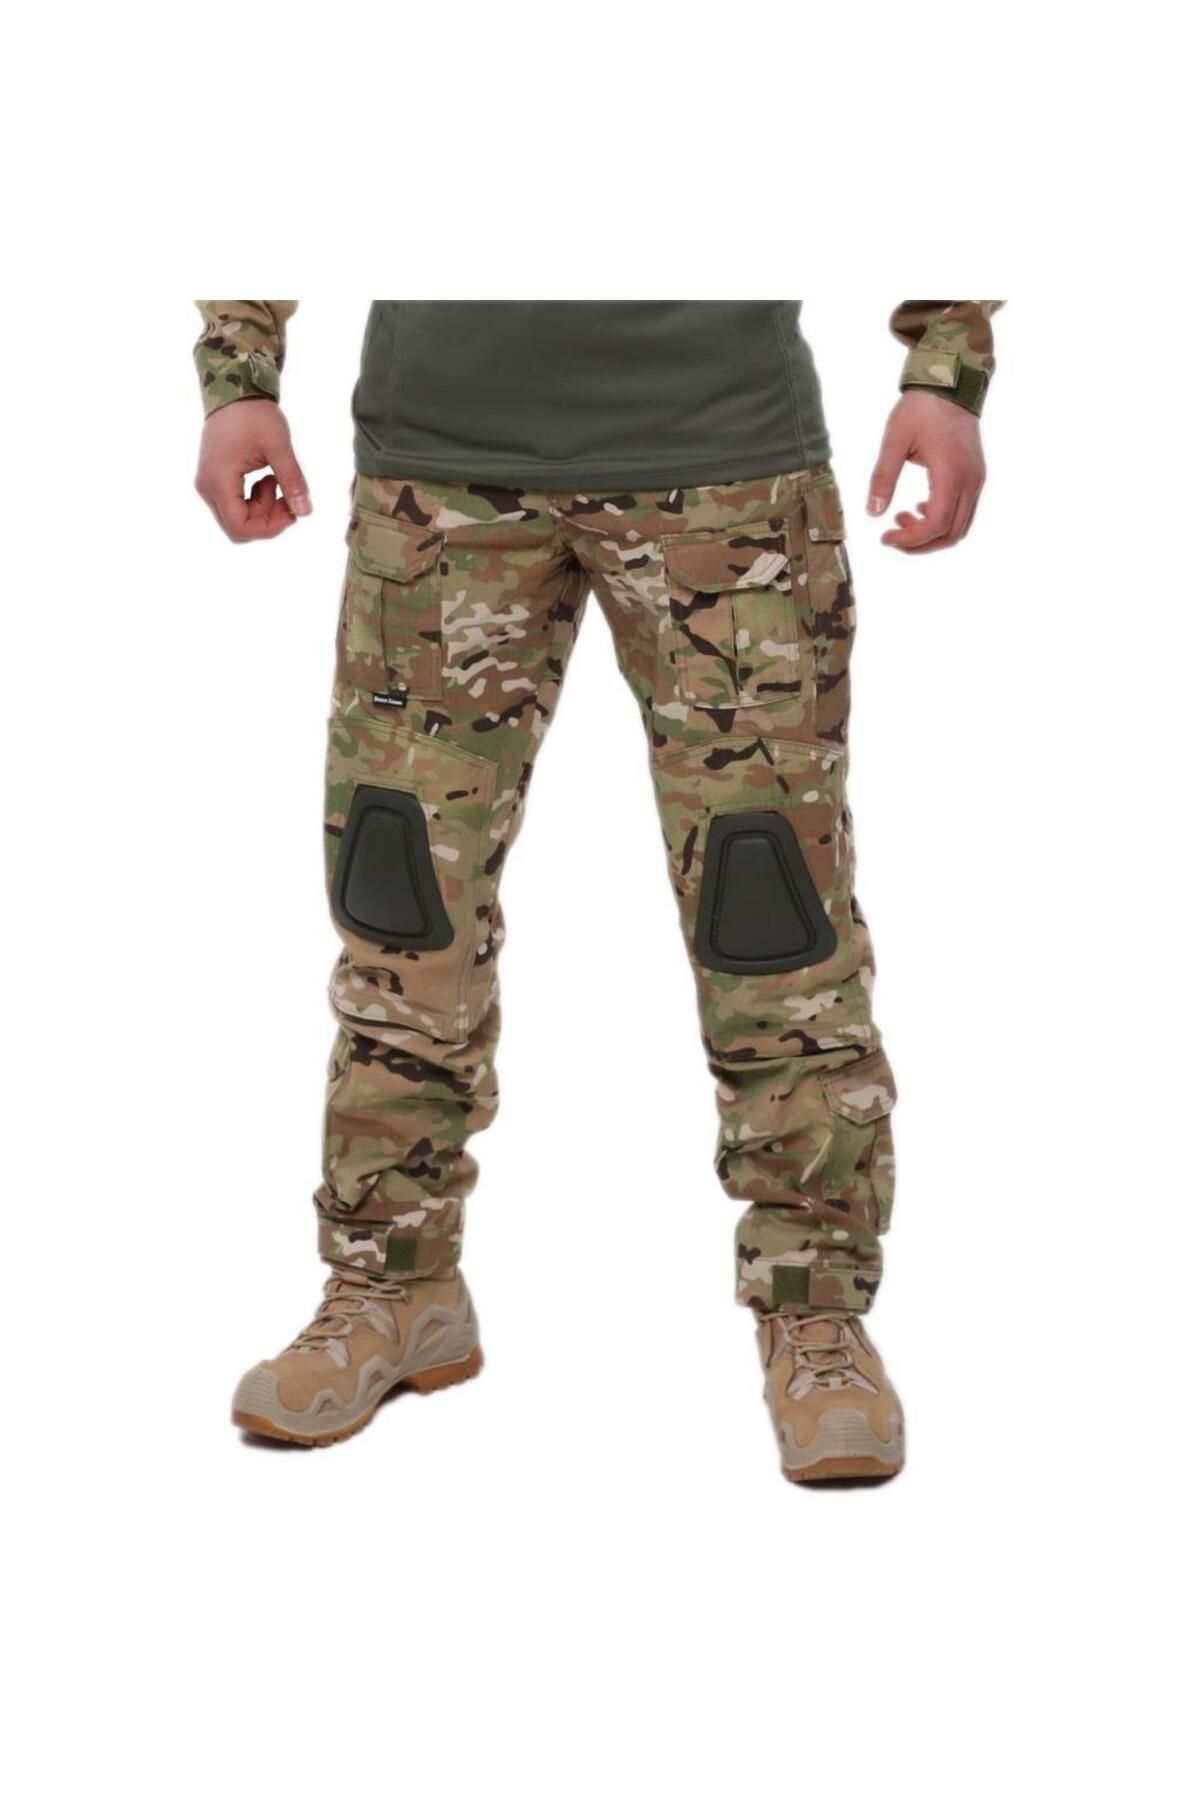 SİNGLE SWORD Dizlikli Kamuflaj Tactical Erkek Pantolon - Outdoor Taktik Pantolon